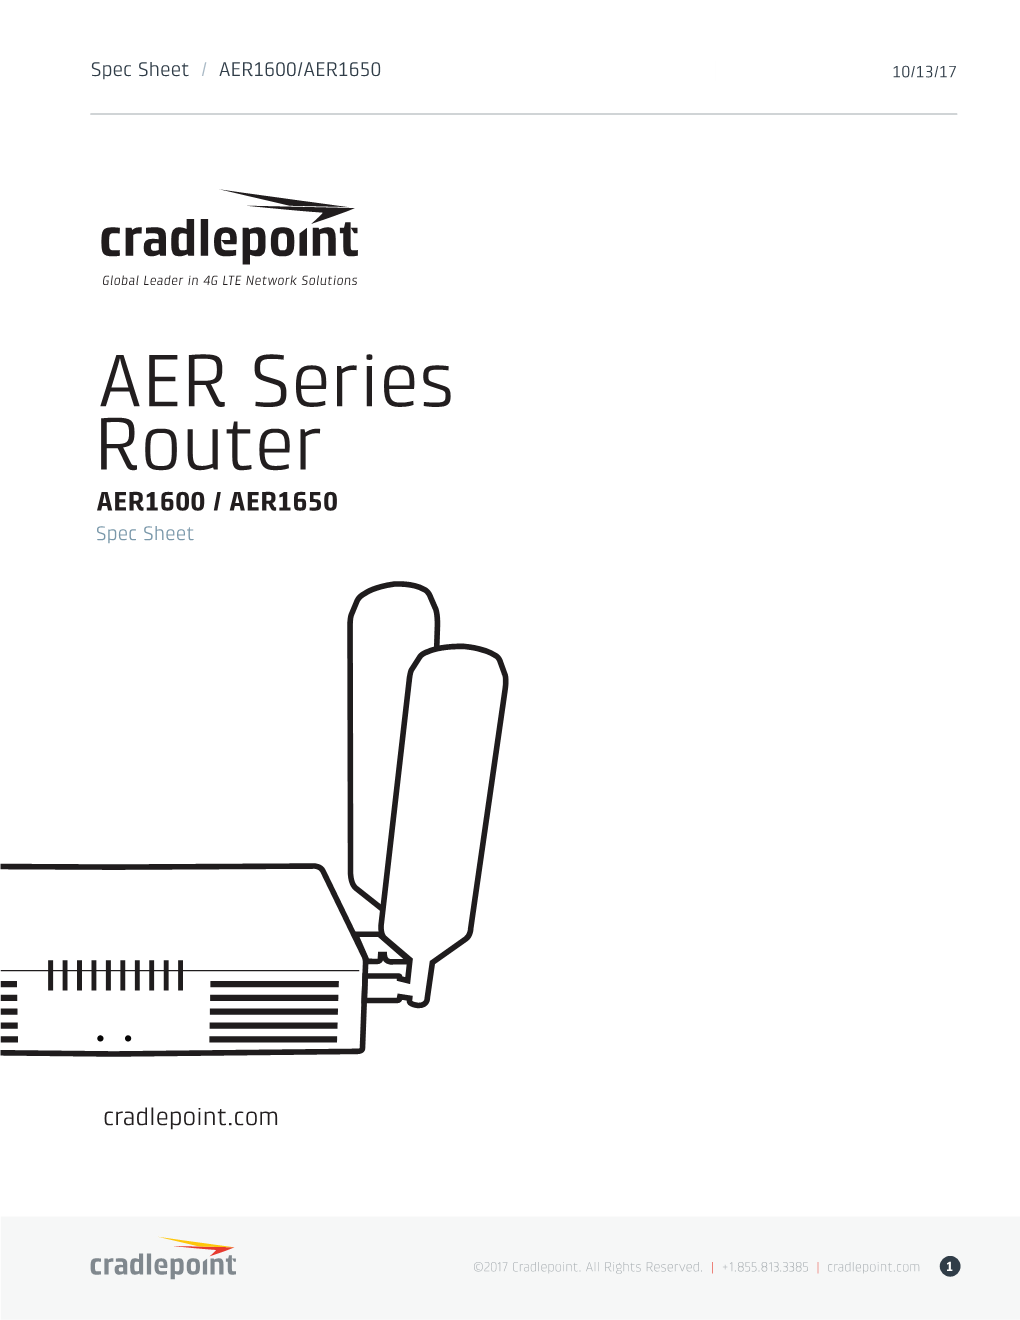 AER Series Router AER1600 / AER1650 Spec Sheet